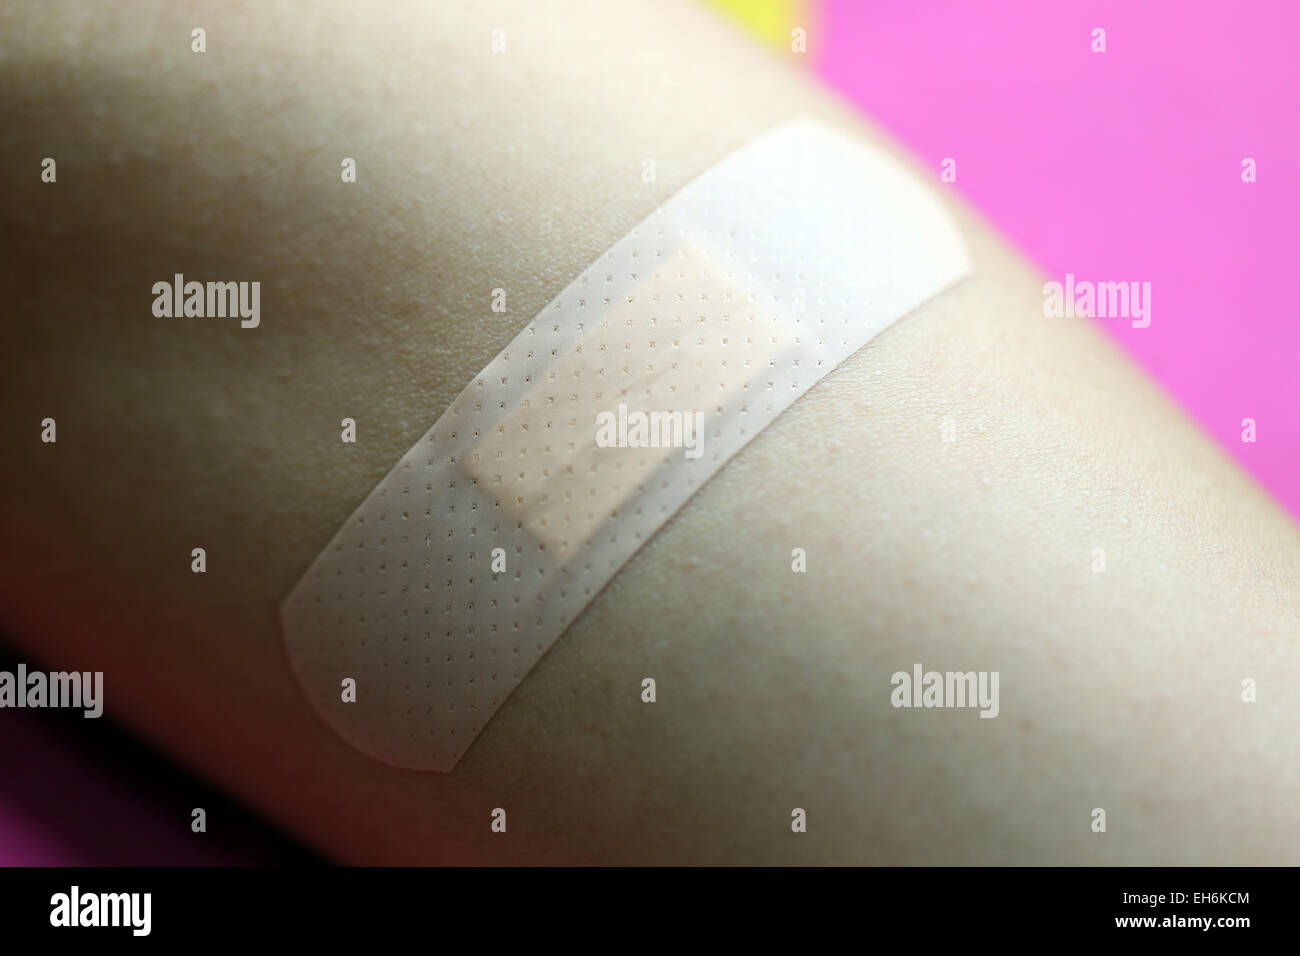 Adhesive plaster on skin of women. Stock Photo